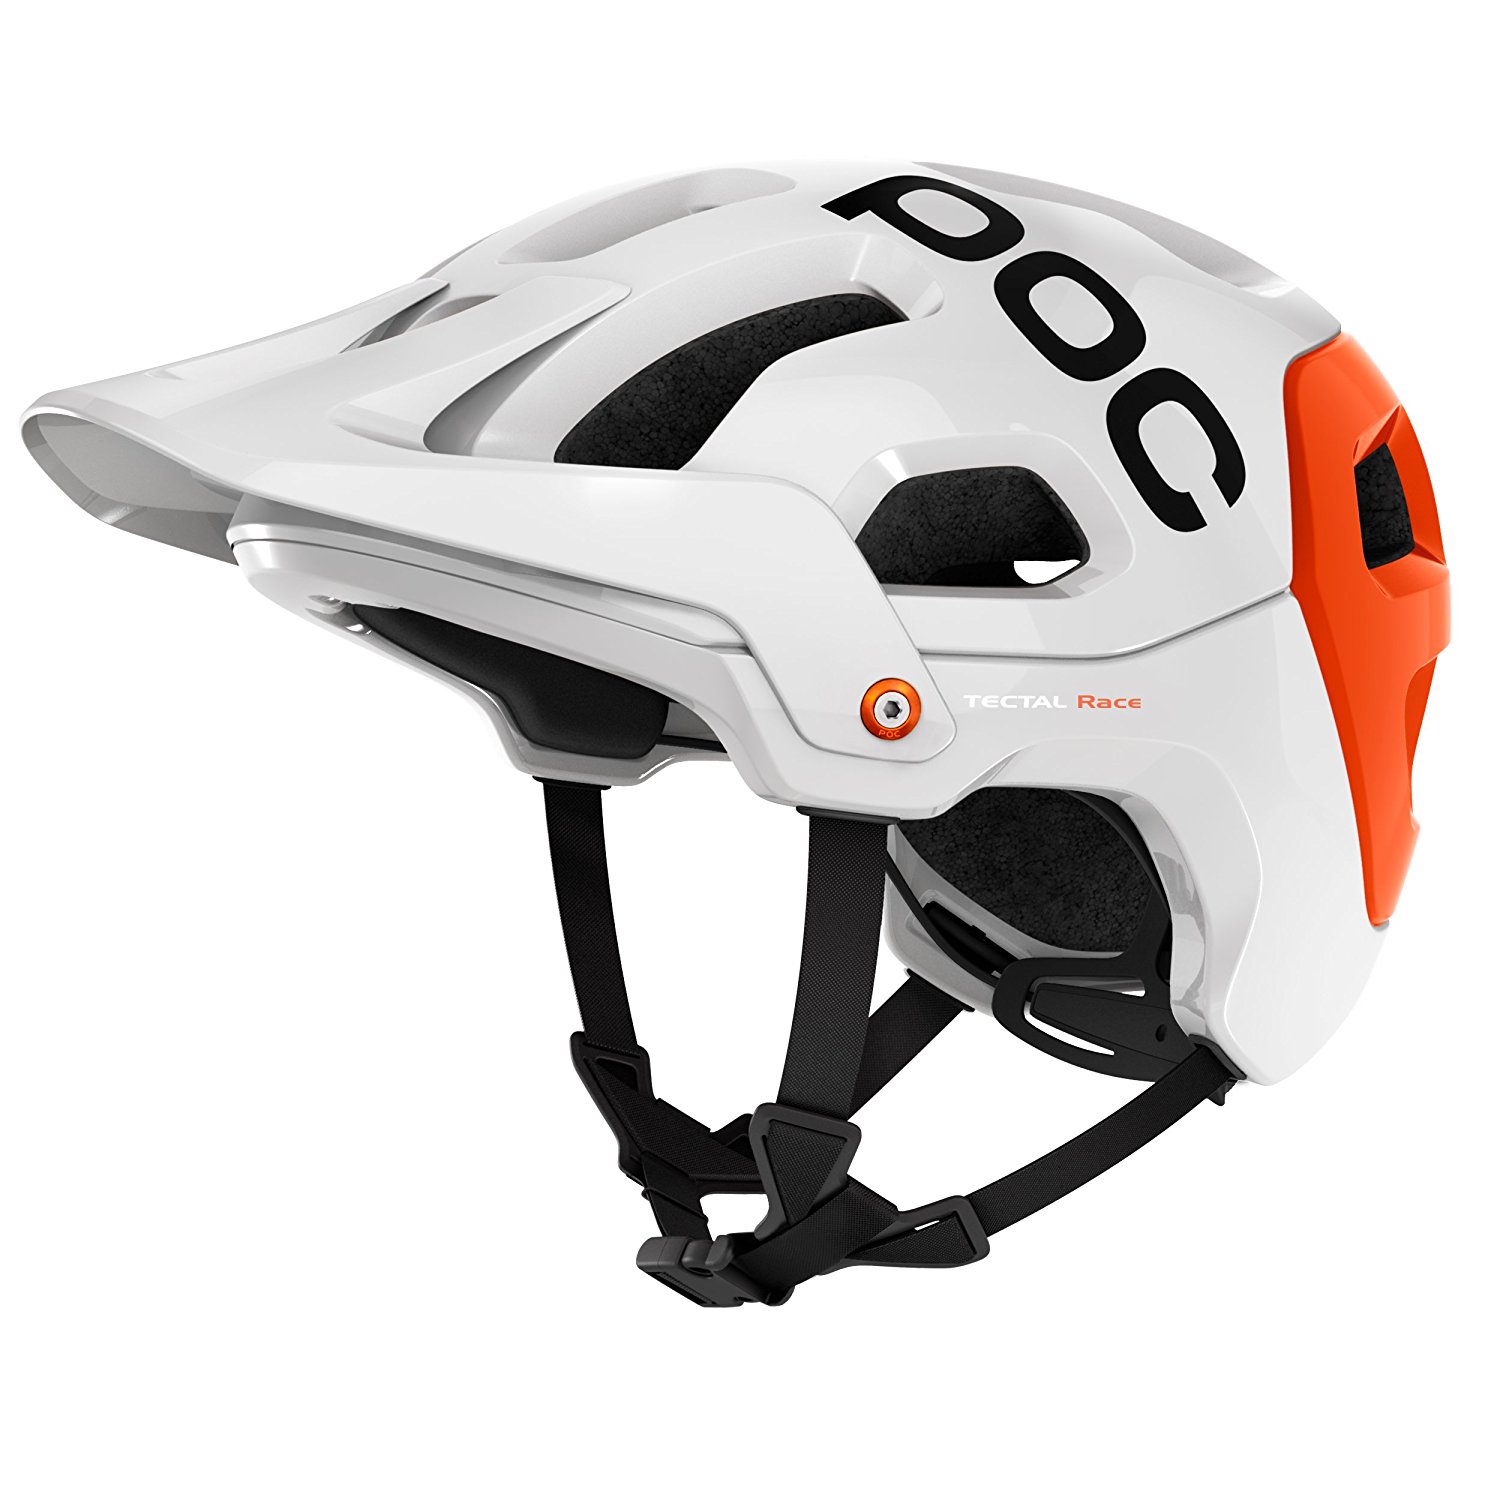 Editors Choice : Top 10 Best Mountain Bike Helmets Review